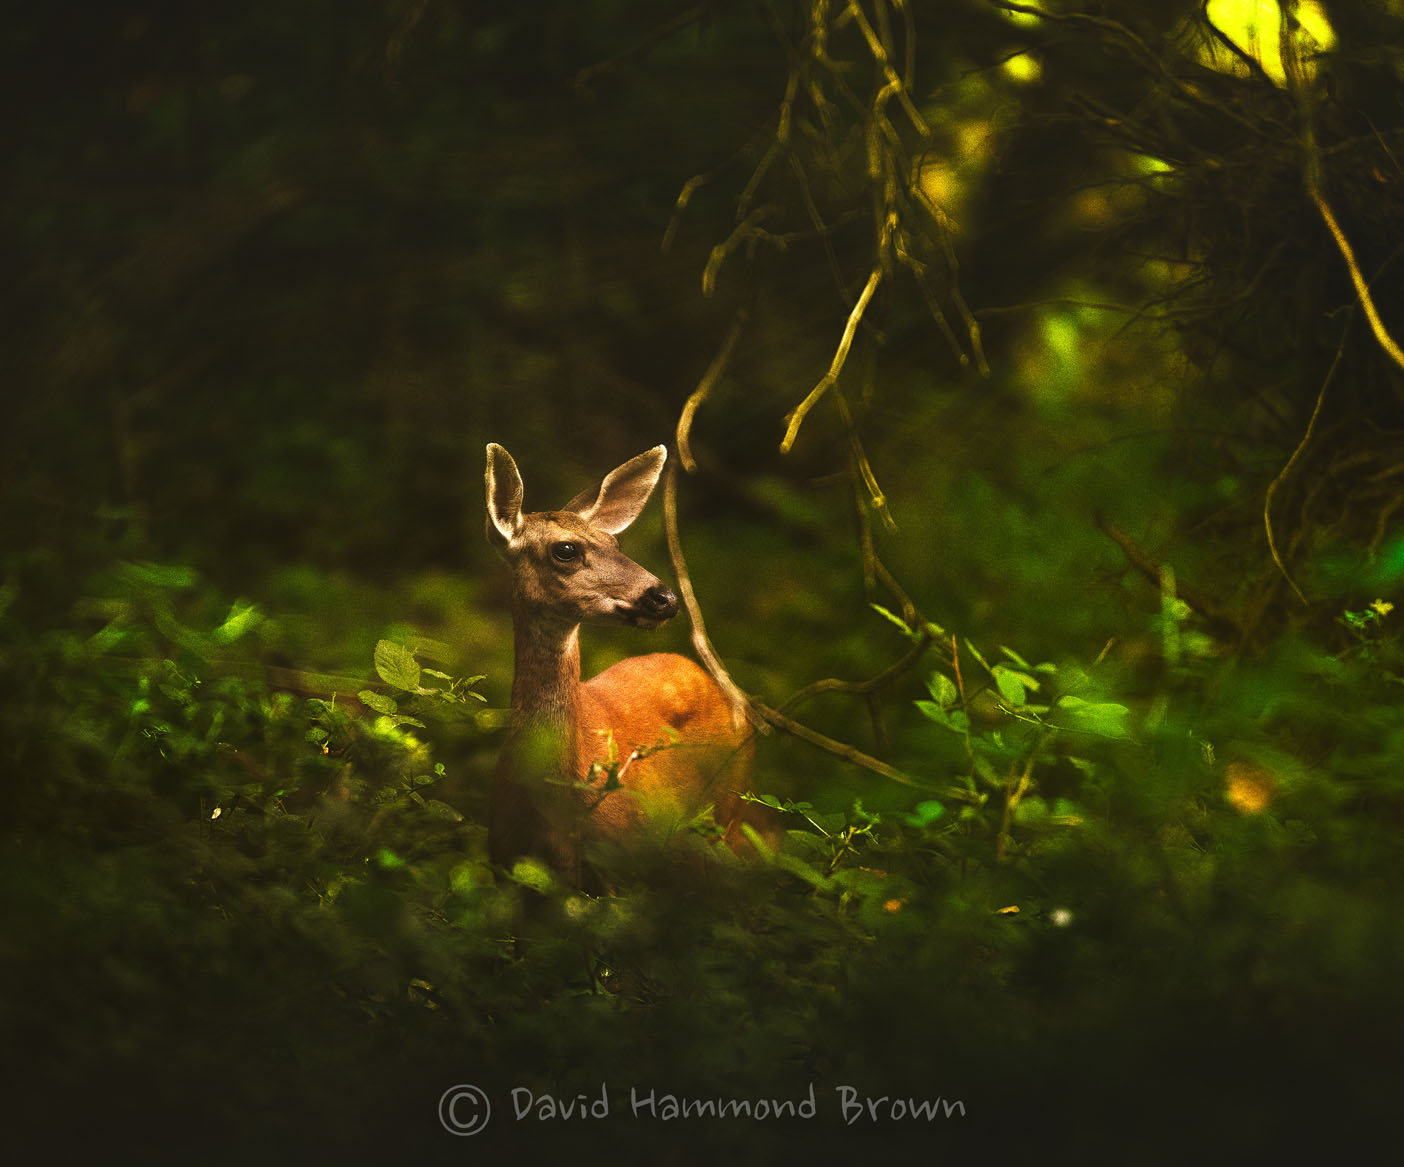 David Hammond Brown Photography - Warm Deer